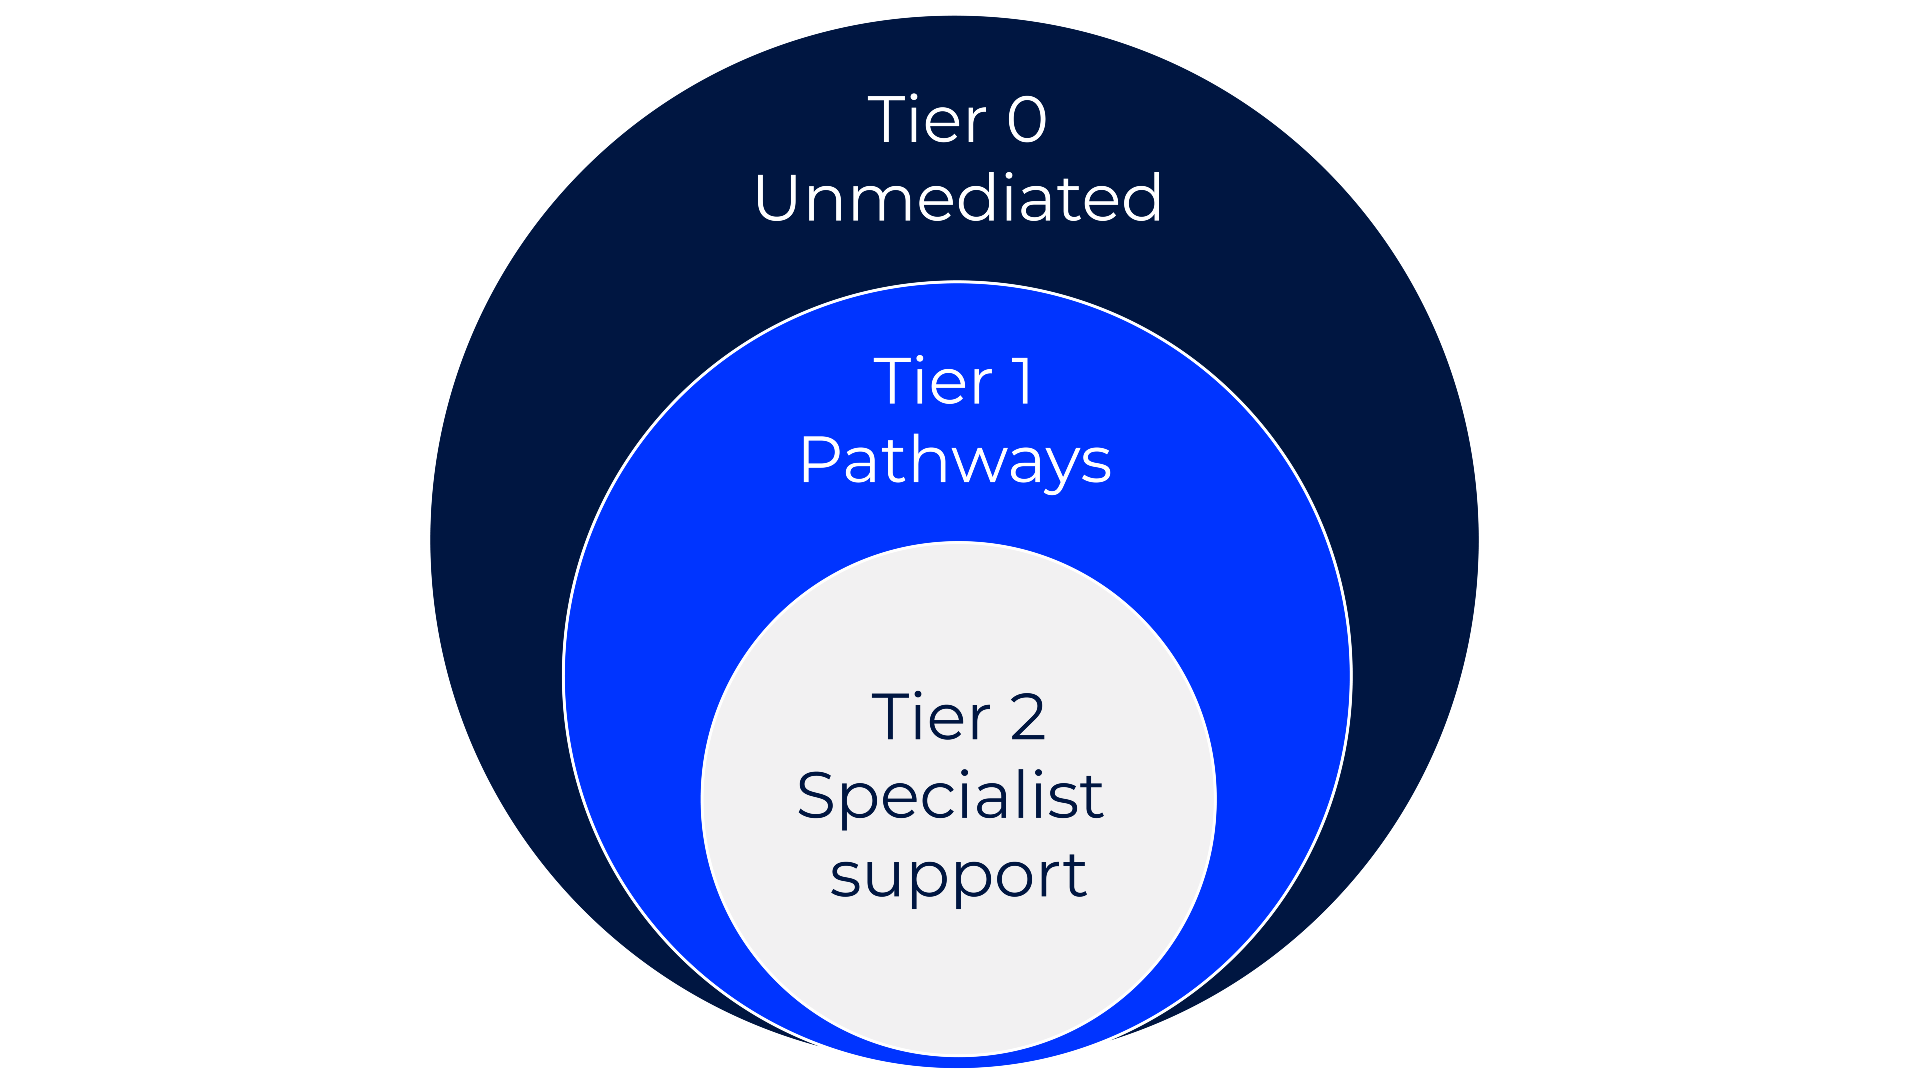 Tiered services model: Tier 0-unmediated, Tier 1-pathways, Tier 3-Specialist support